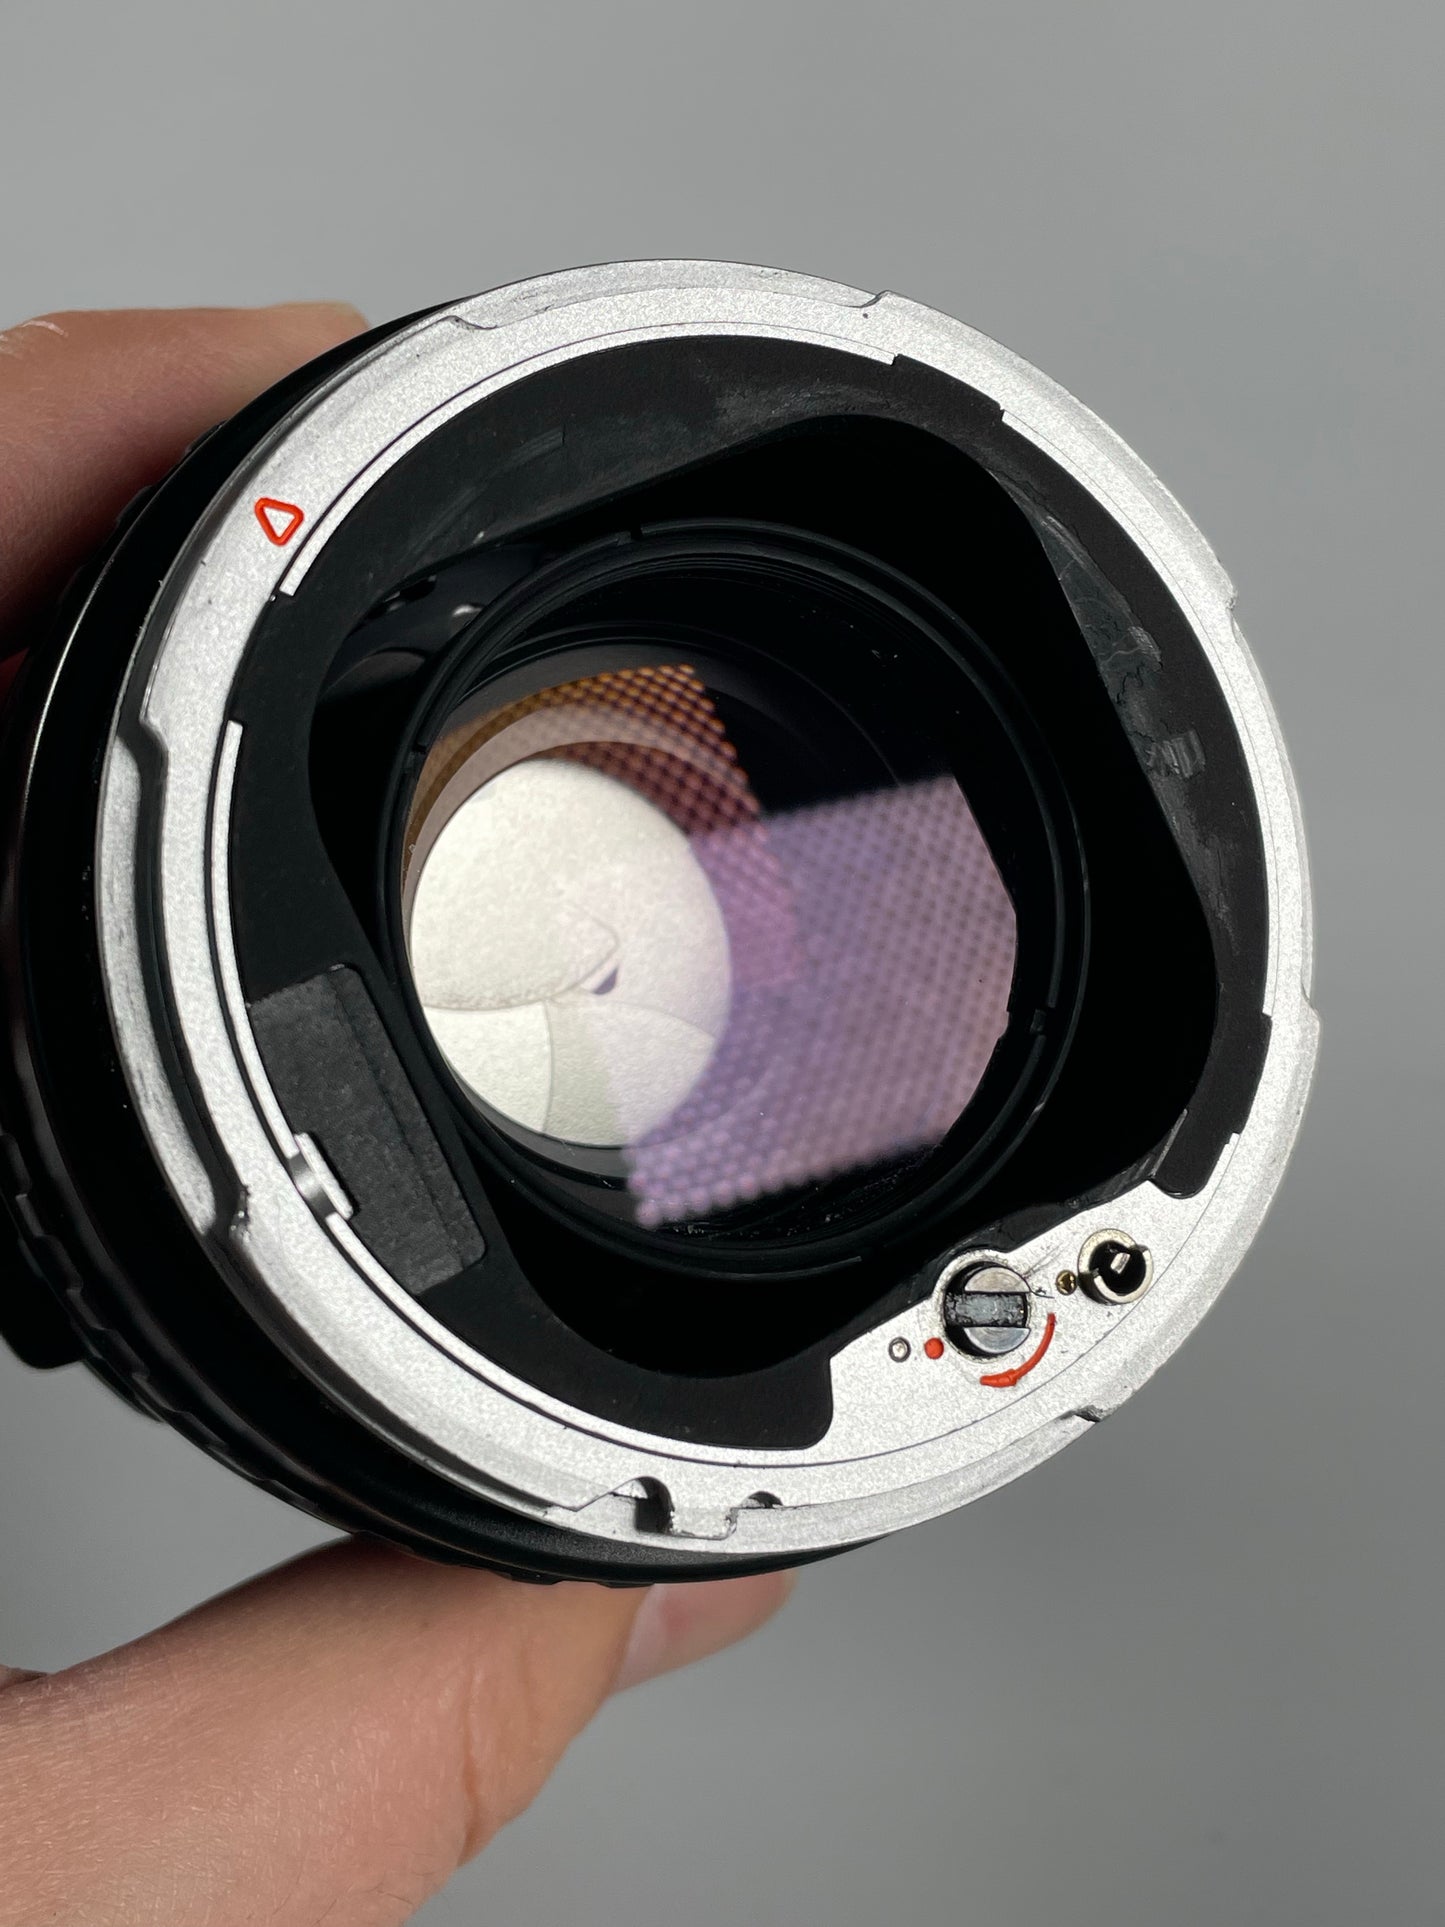 Hasselblad 150mm f4 Zeiss Sonnar T* CFI RARE Lens 150/4 BLACK